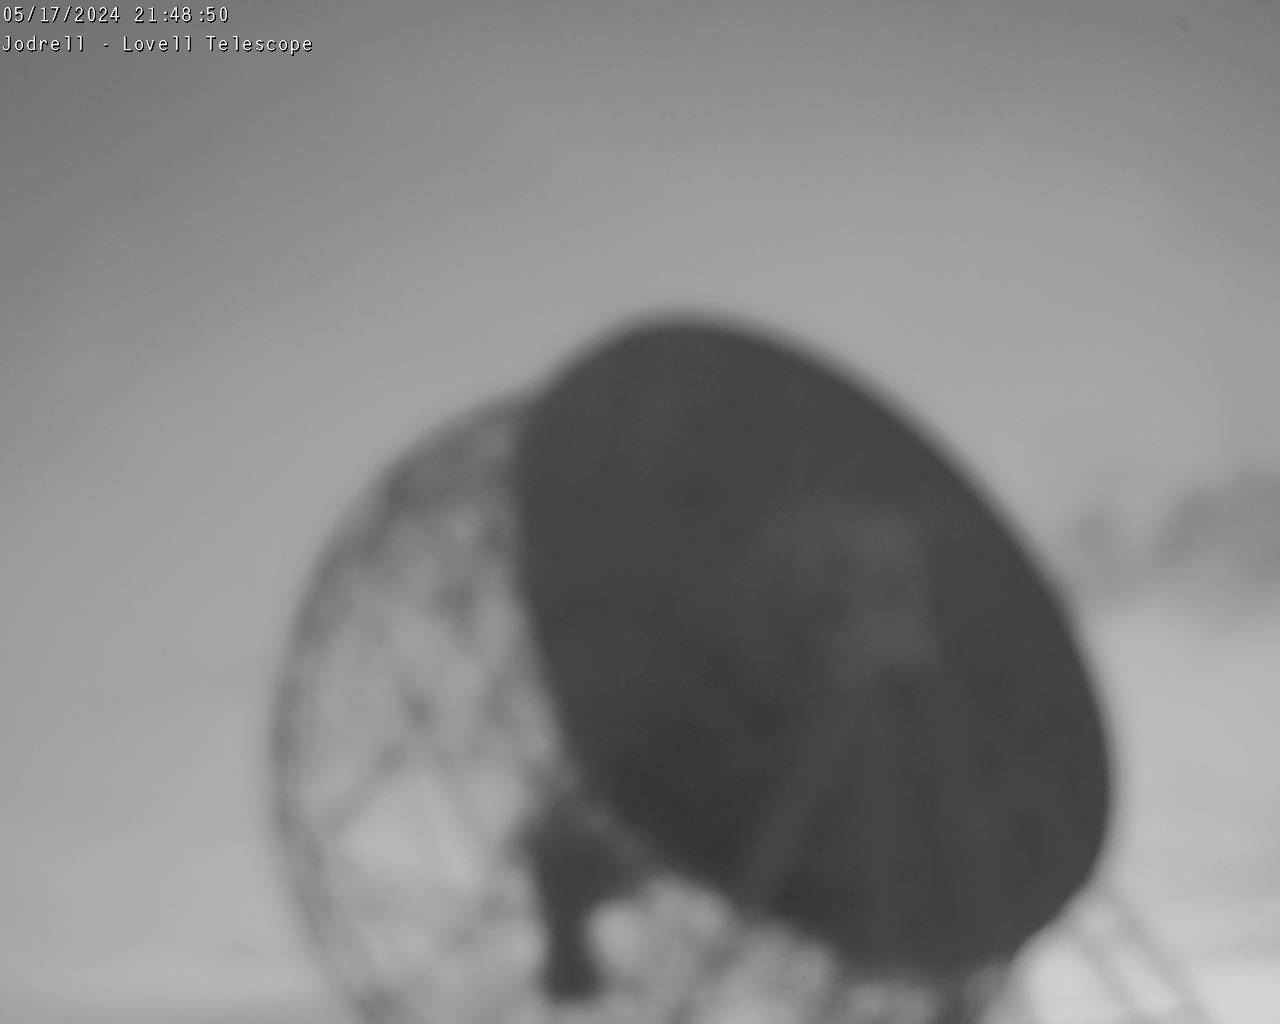 Observatorio Jodrell Bank Vie. 21:49